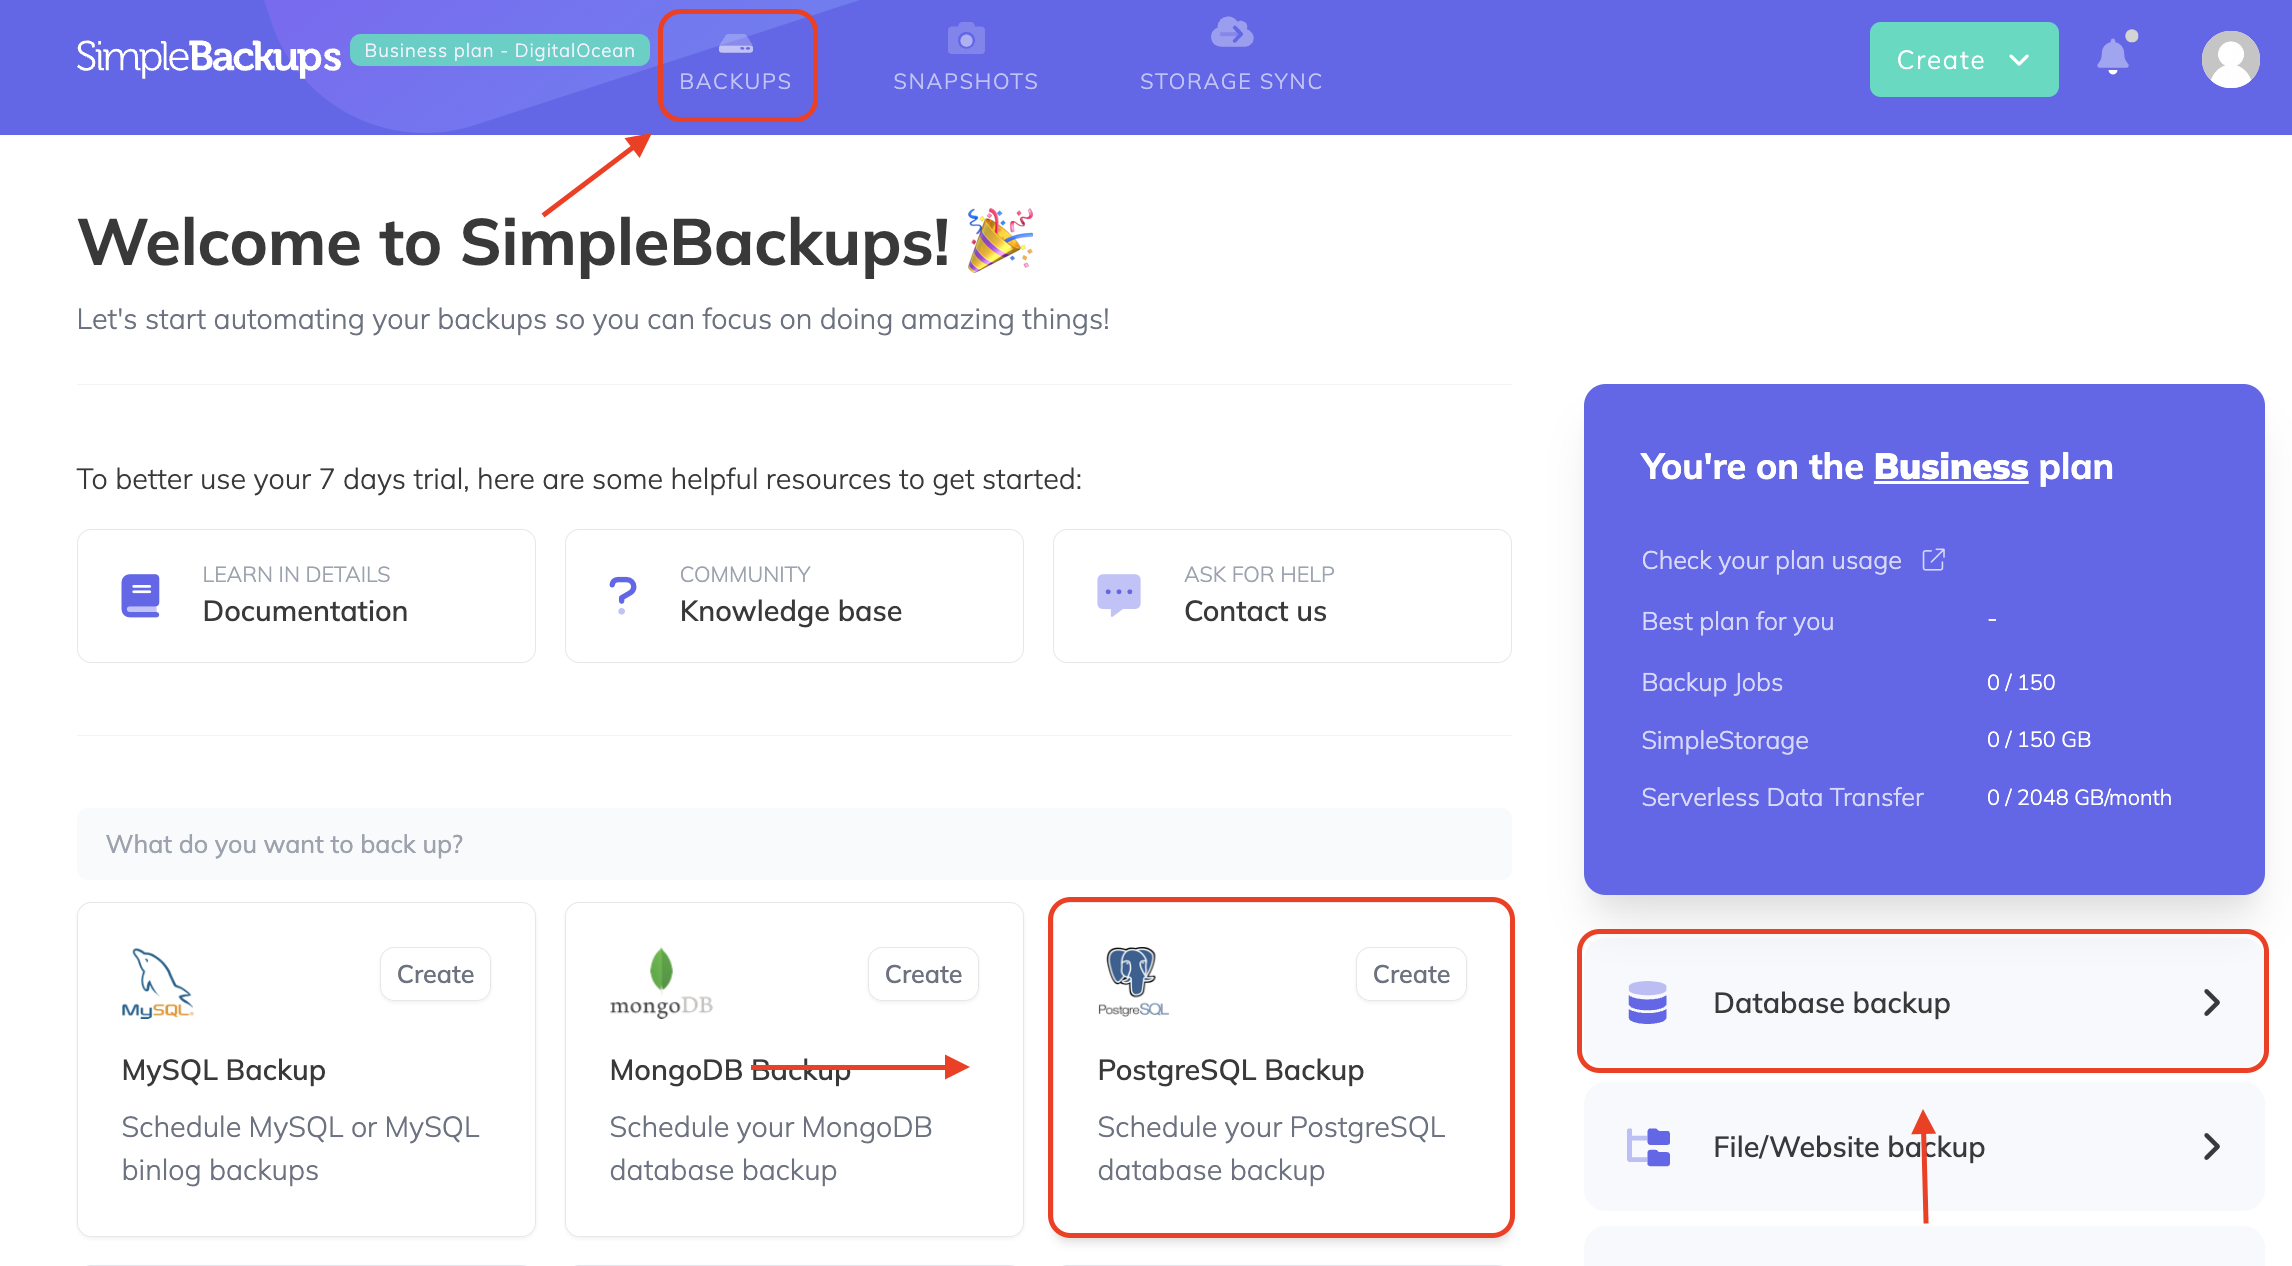 How to create a PostgreSQL backup with SimpleBackups